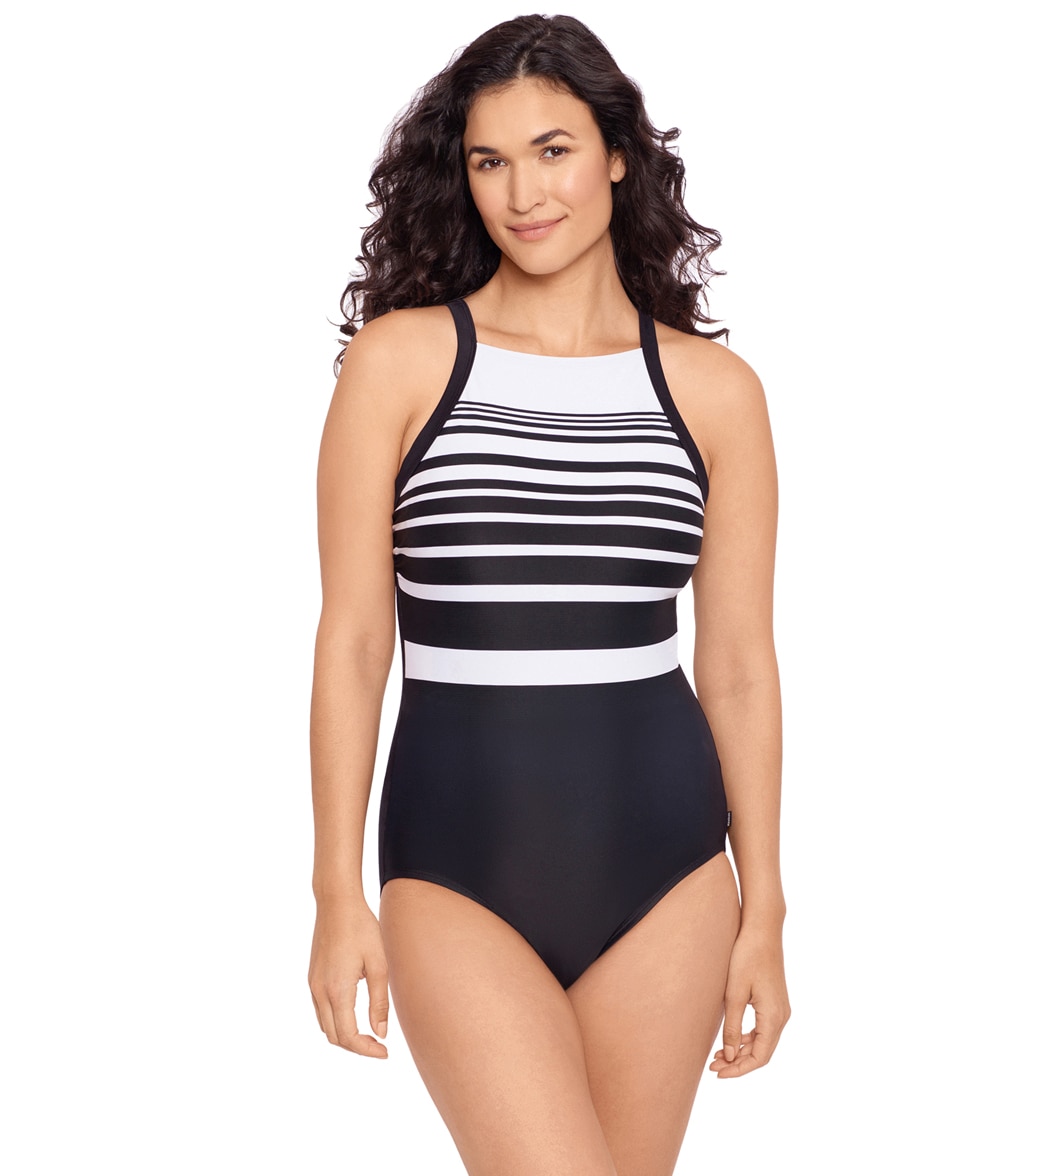 Reebok Women's Insta Stripe High Neck Chlorine Resistant One Piece Swimsuit - Black/White 12 - Swimoutlet.com